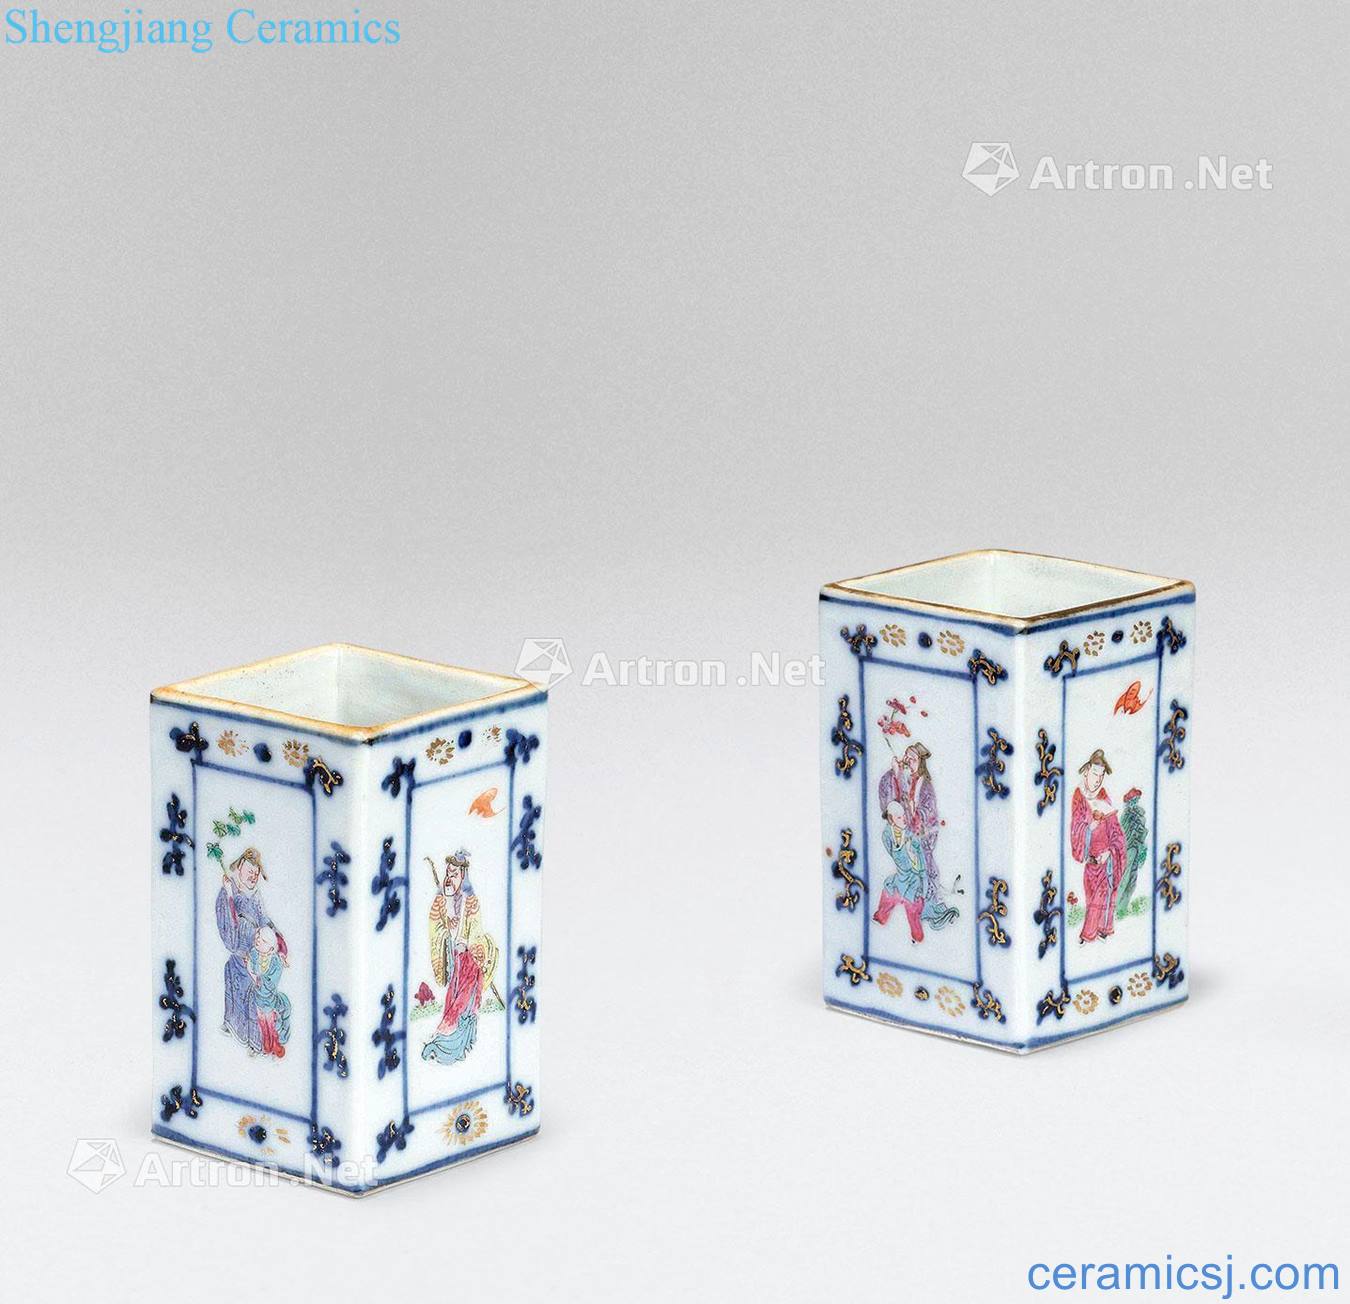 Qing porcelain enamel characters pen container (a)